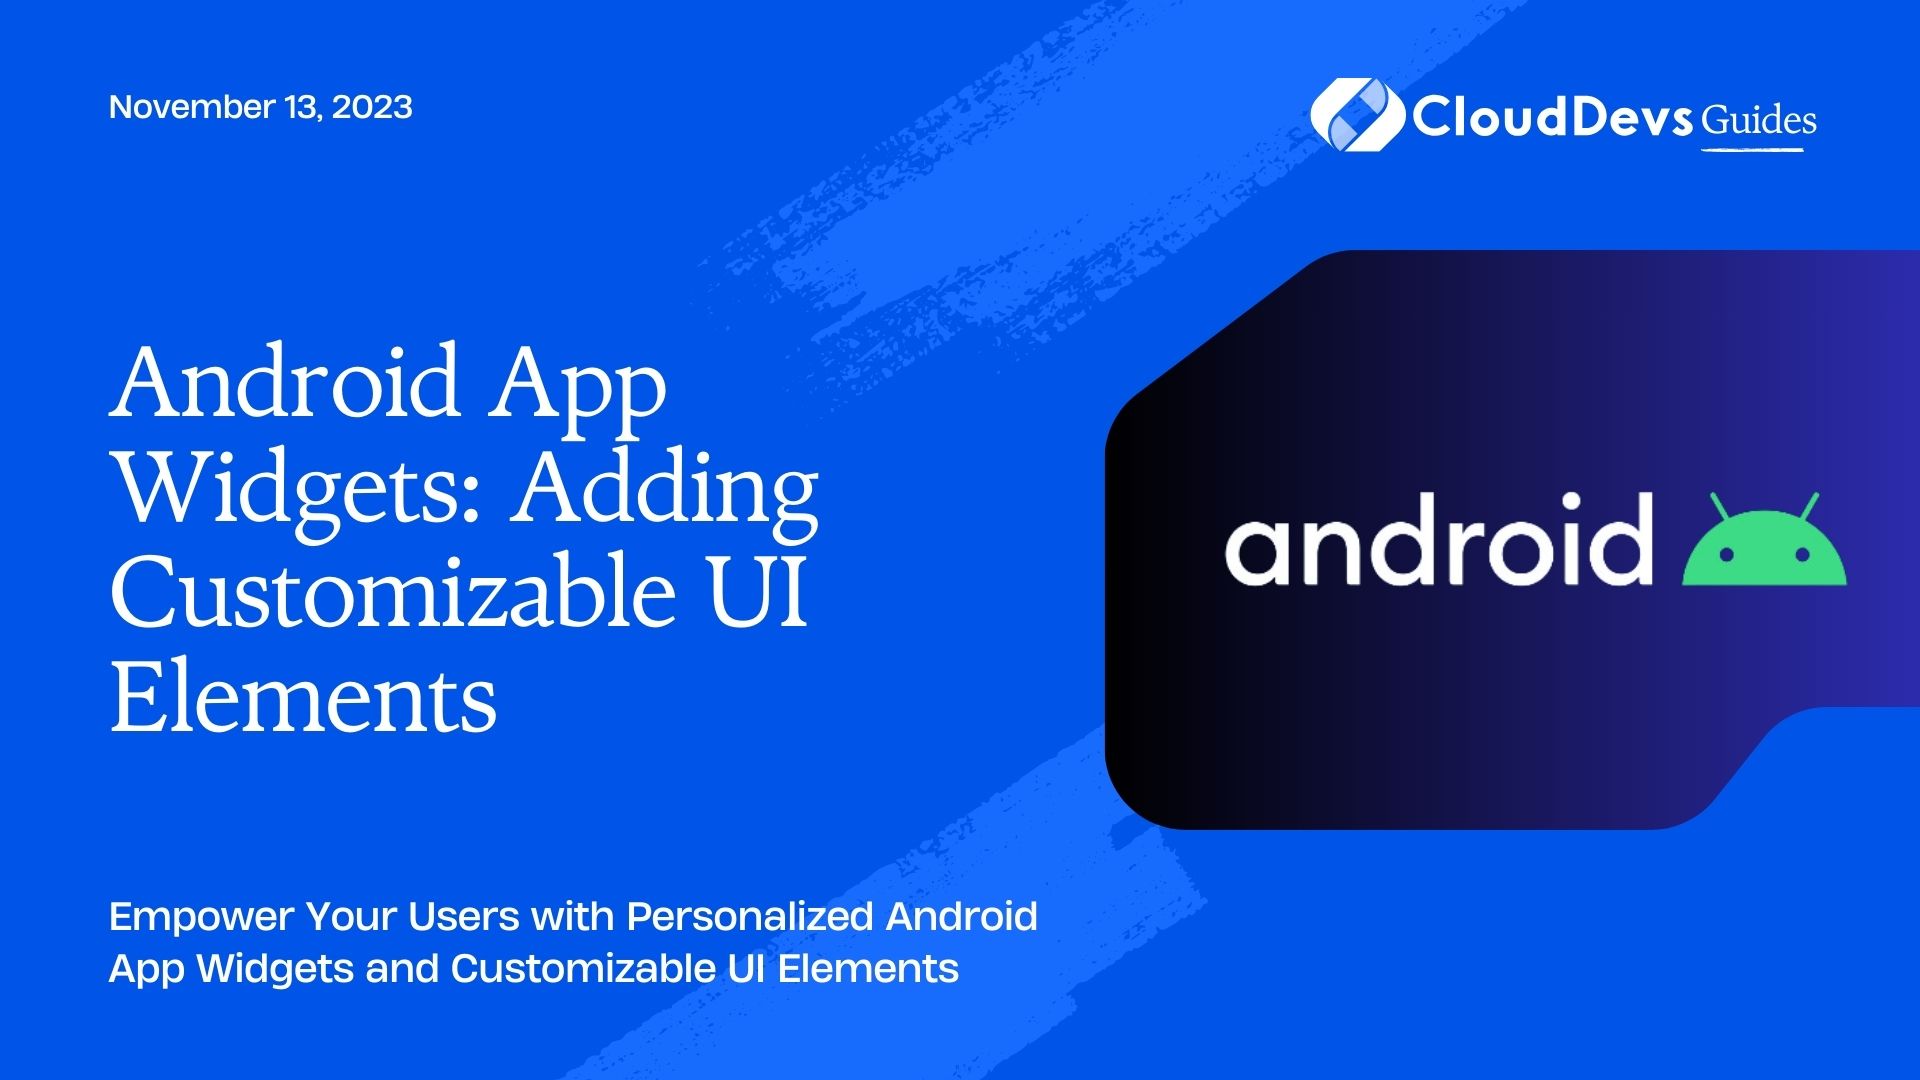 Android App Widgets: Adding Customizable UI Elements